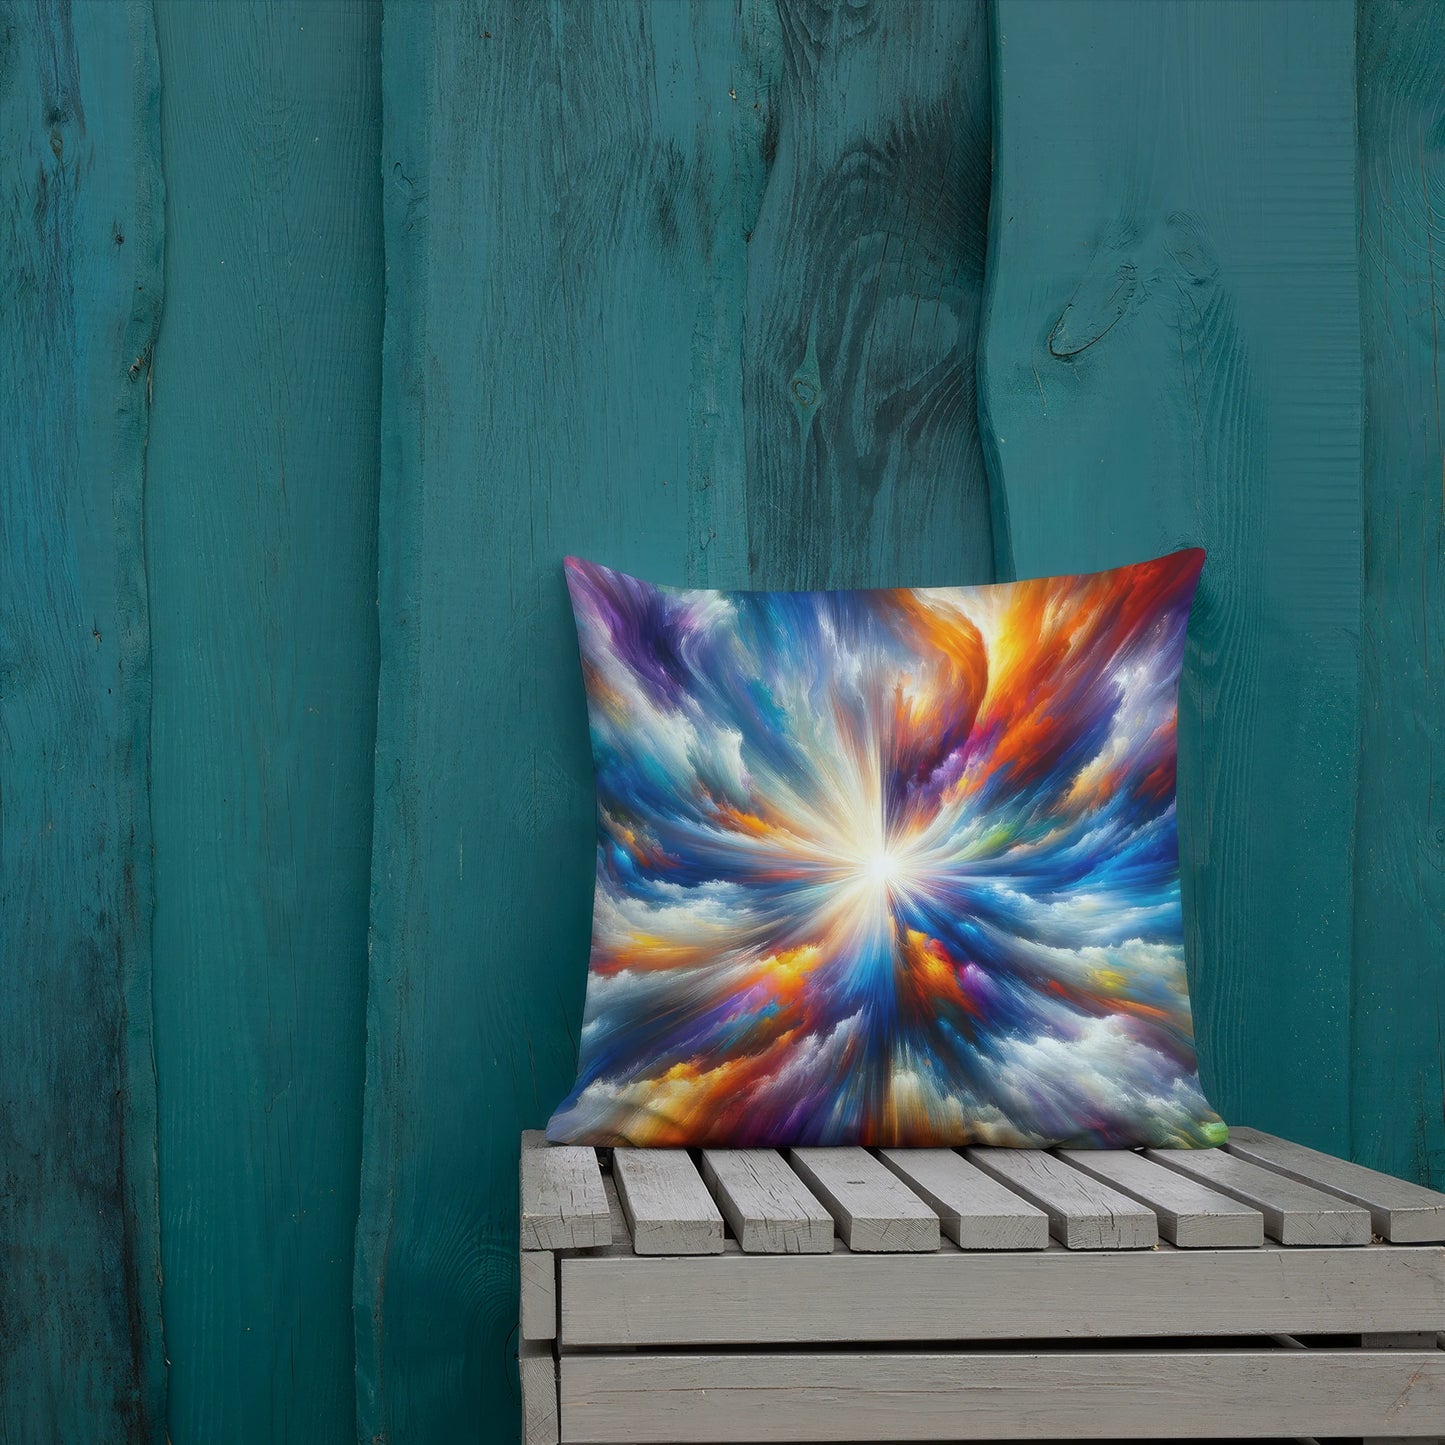 Abstract Art Pillow: Fusion Spectrum